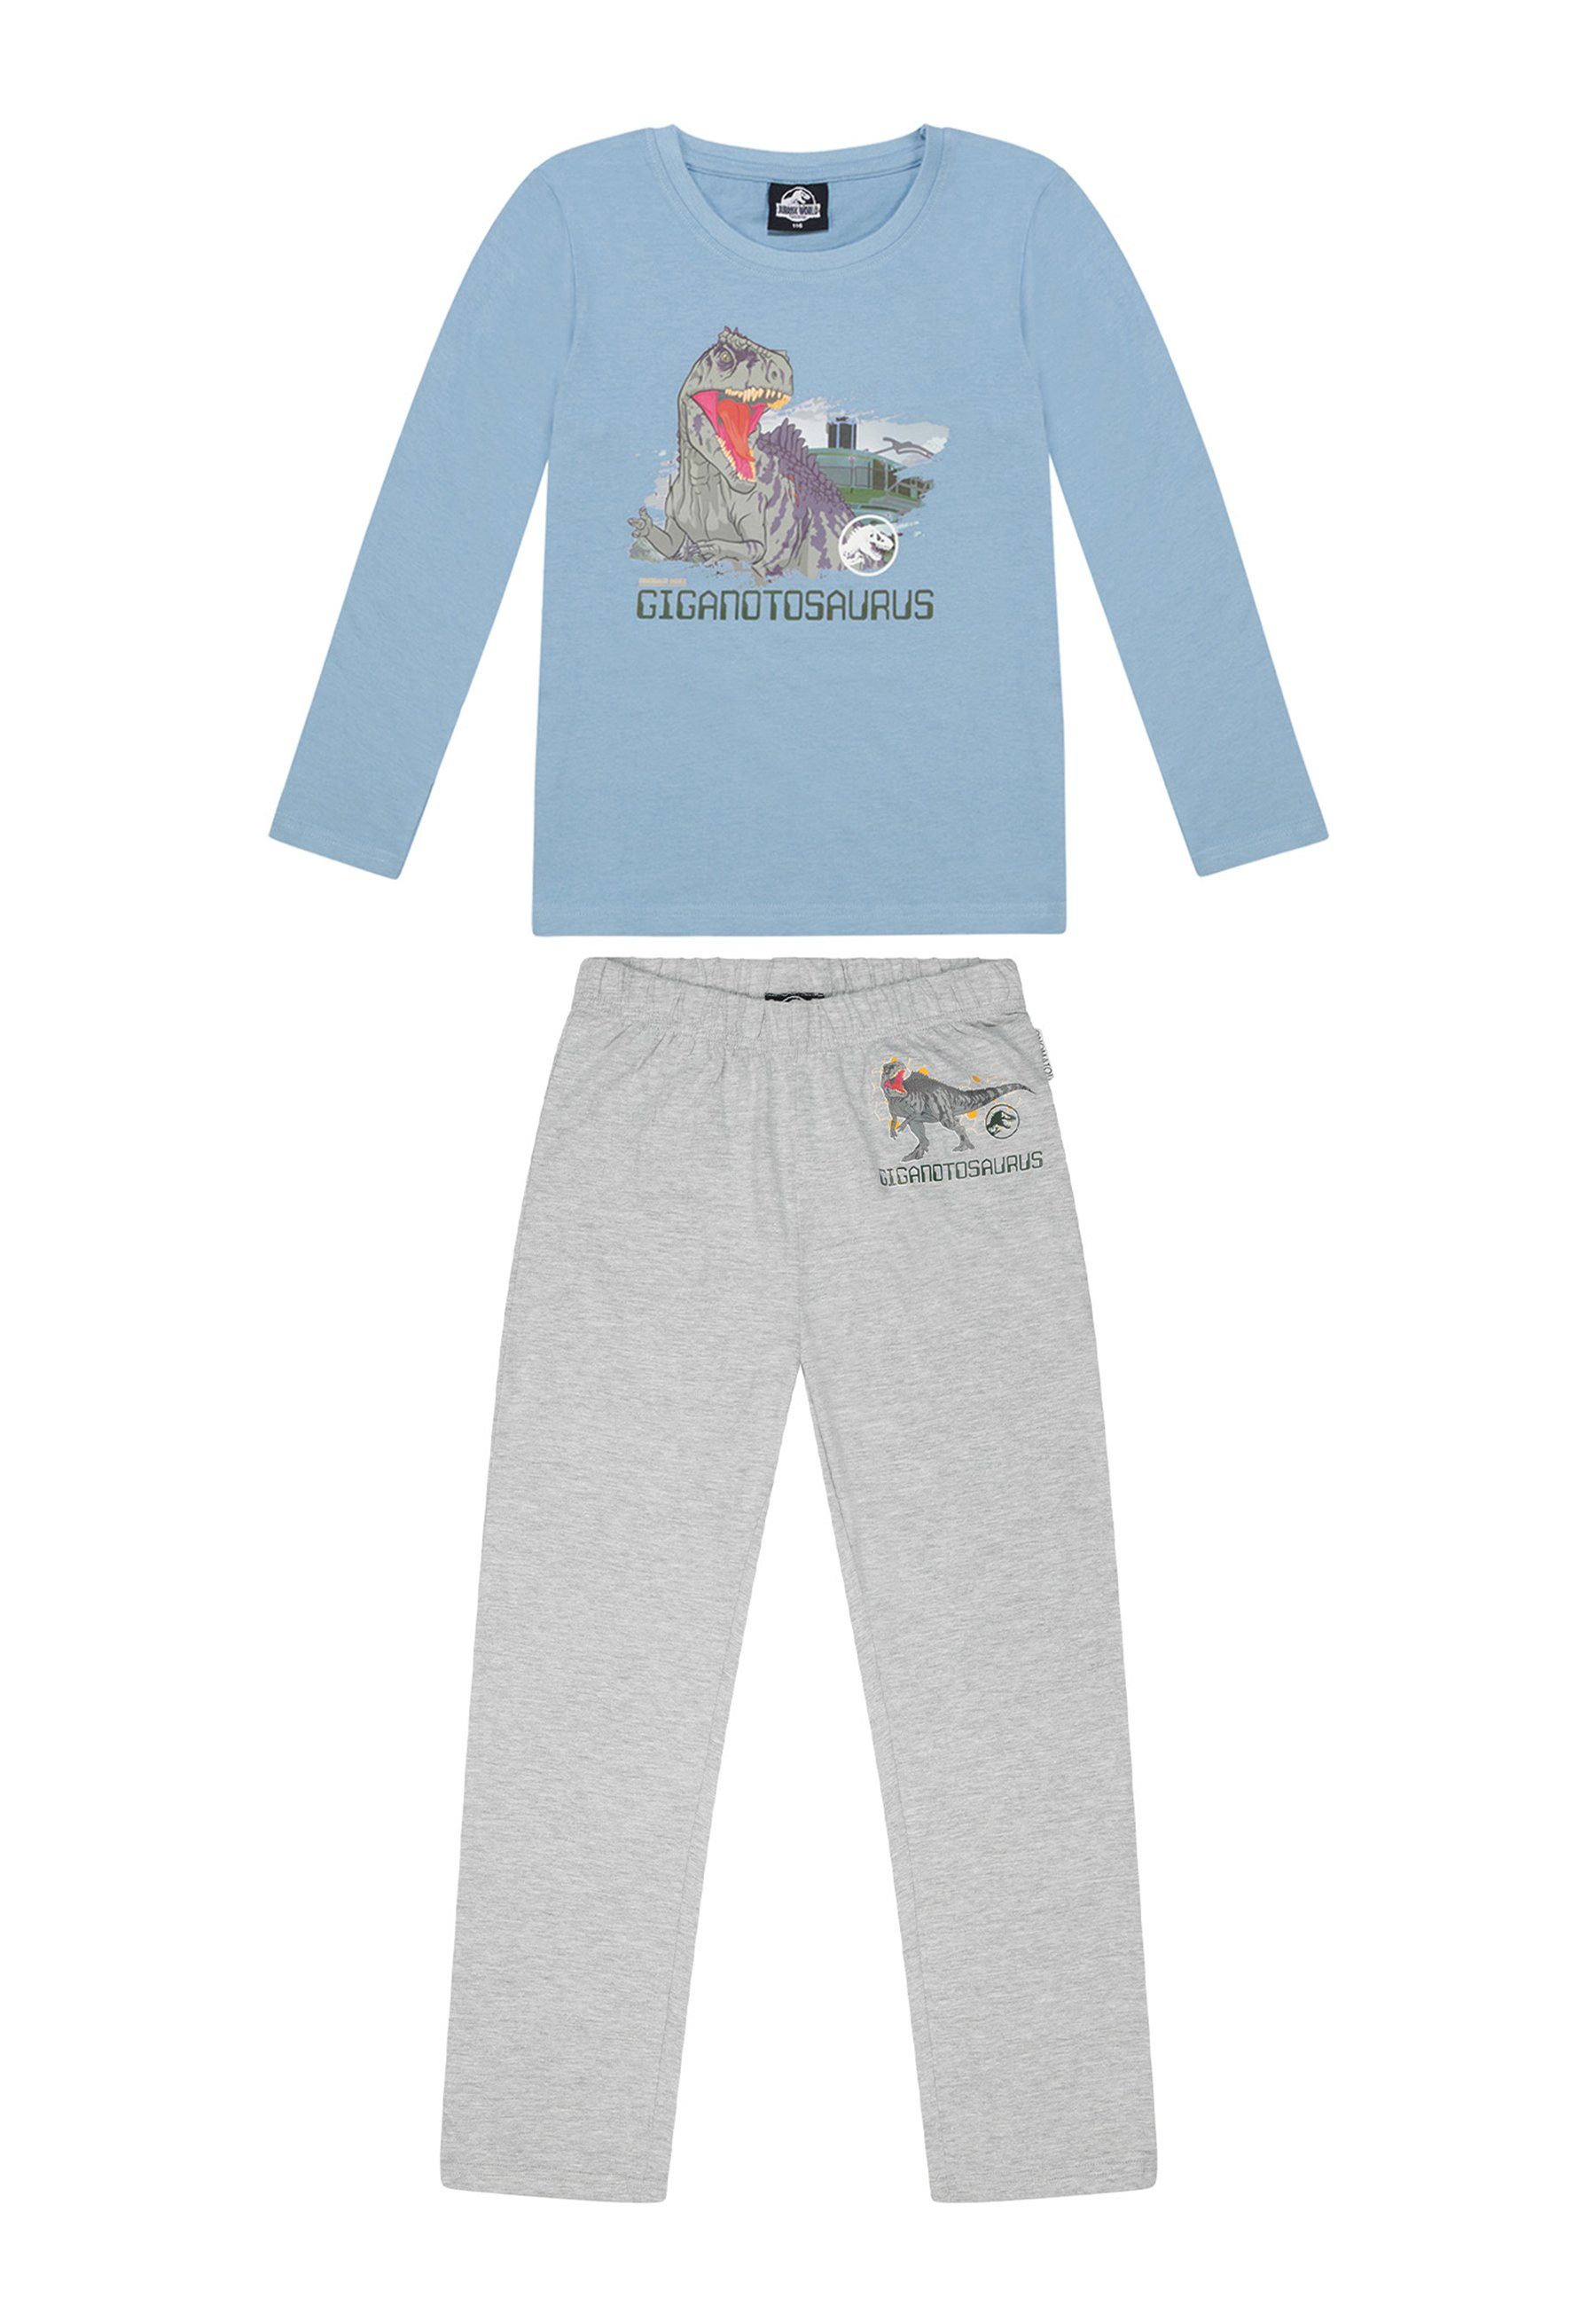 ONOMATO! Schlafanzug Jurassic World Giganotosaurus (2 Pyjama-Set tlg) Schlafanzug